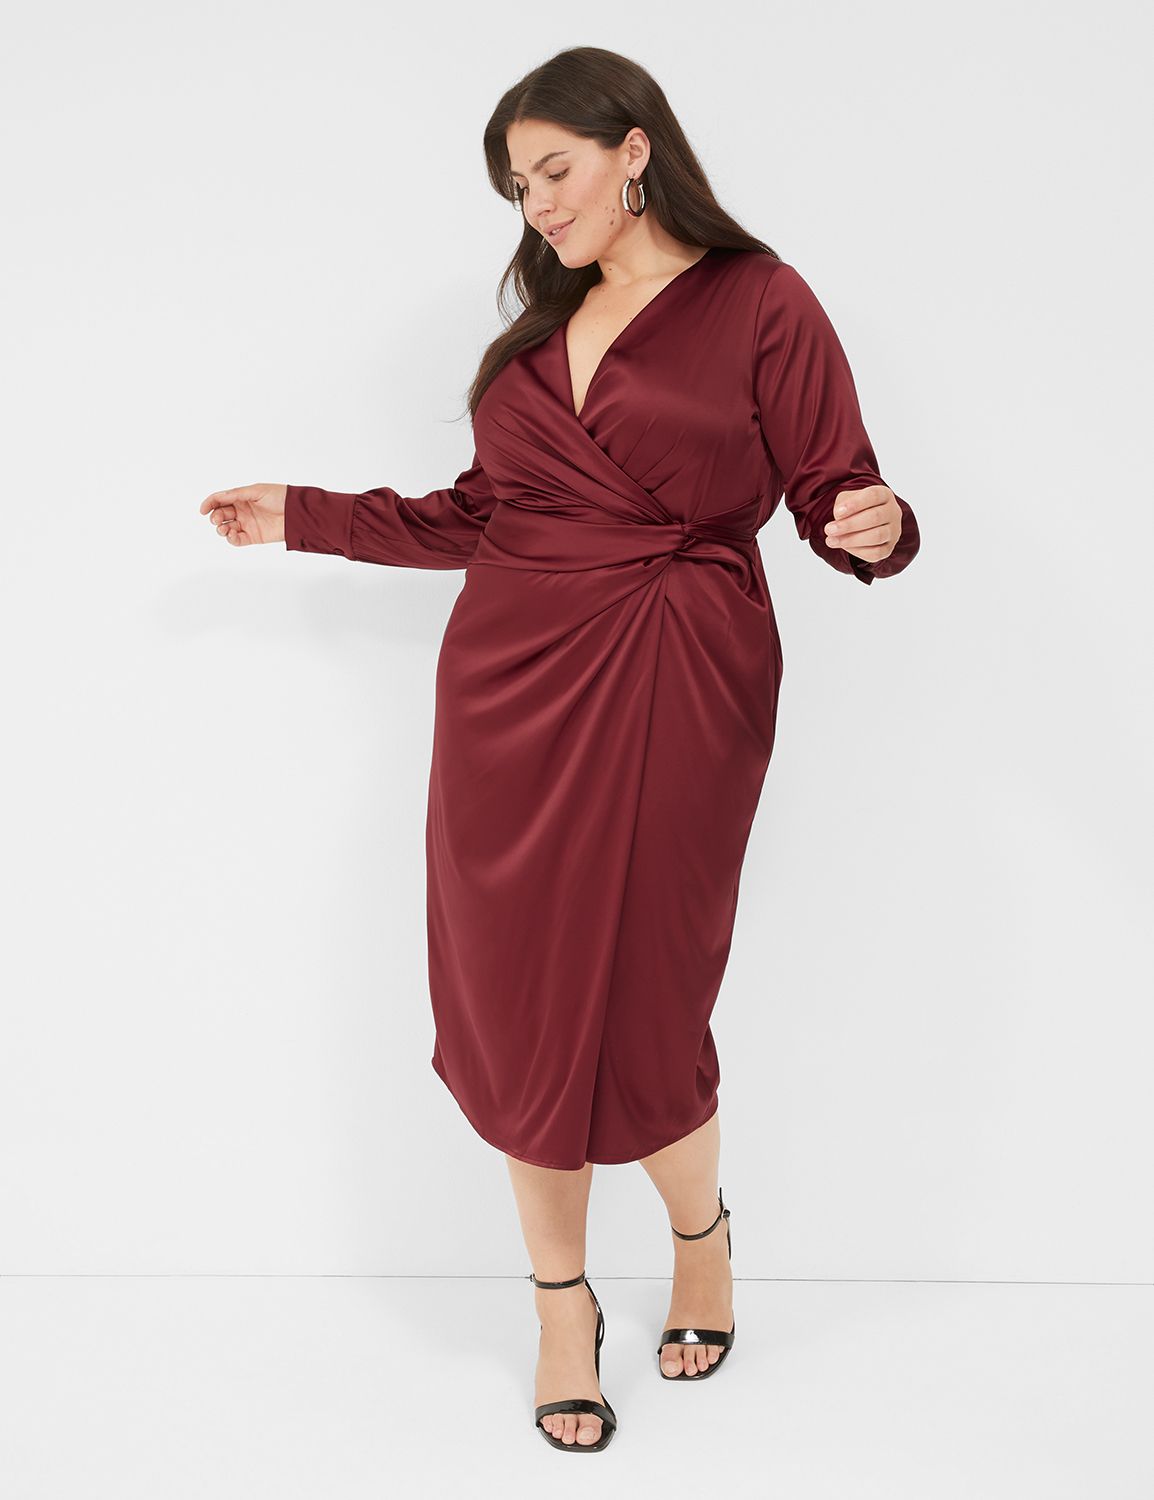 Stretchy Burgundy Women Dress Size L/XL True Size Sexy open back dress